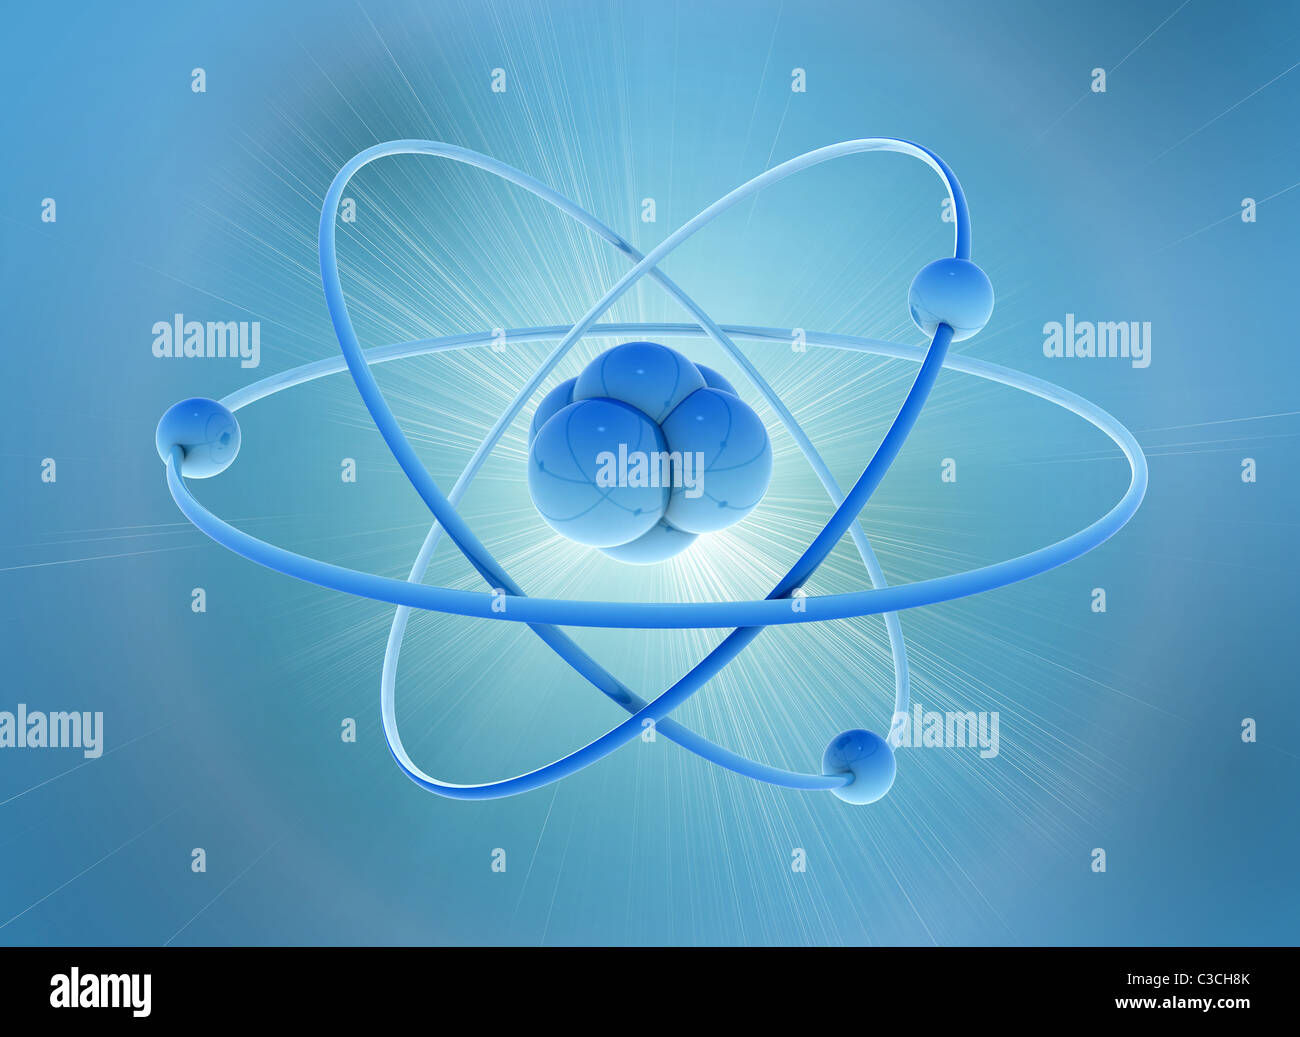 Atom illustration Stock Photo